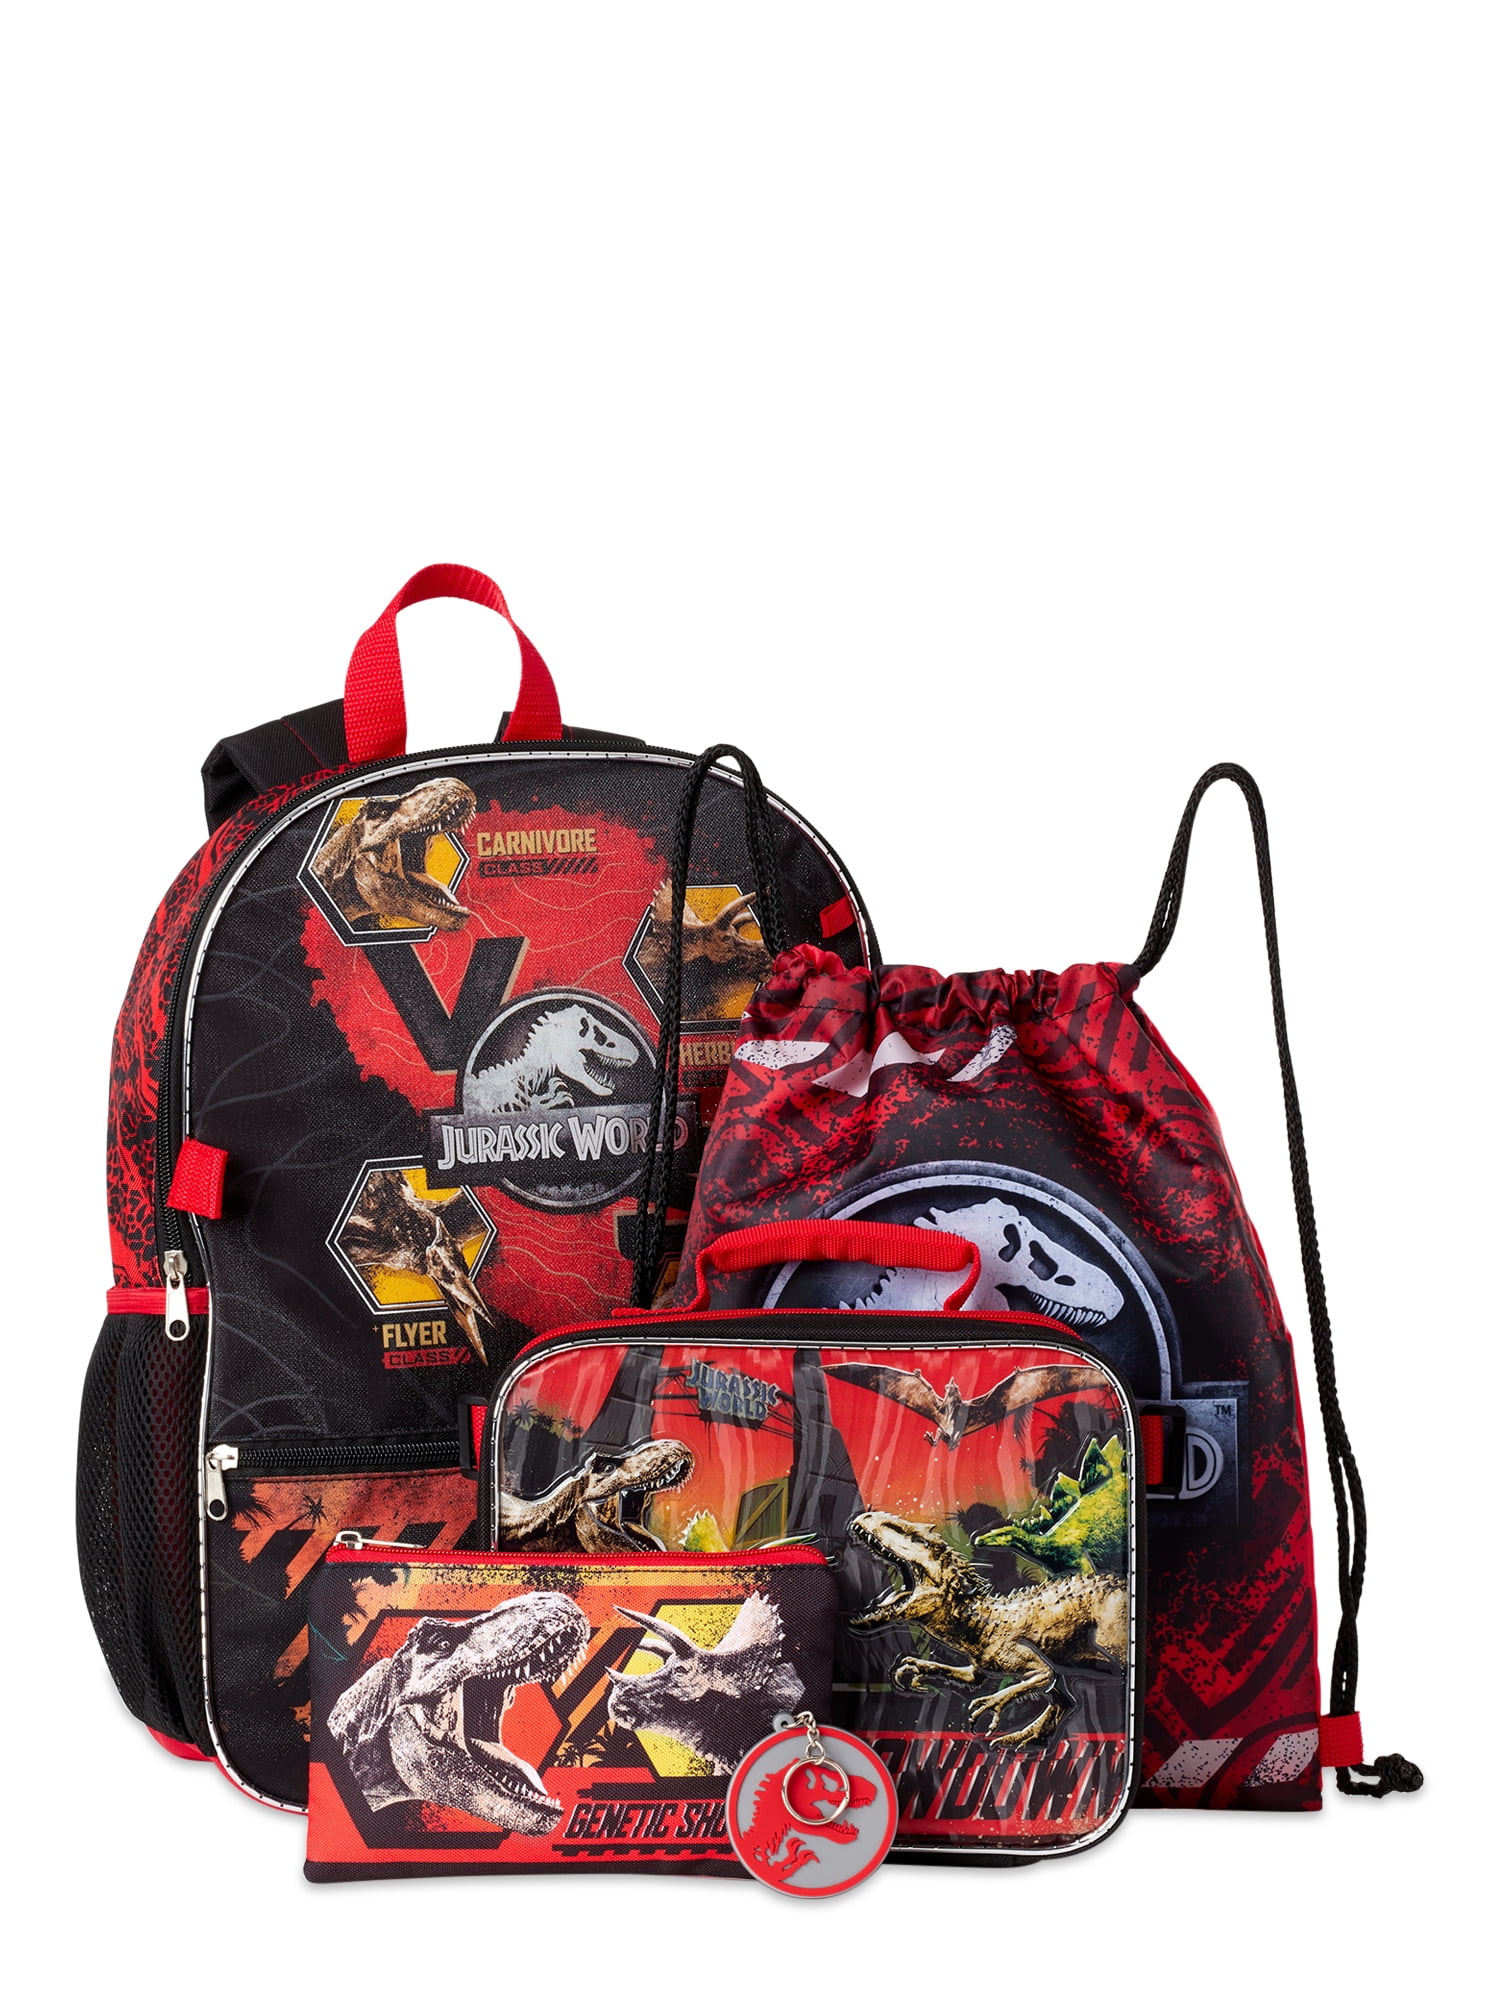 2020 Jurassic World Park Dinosaur Backpack School Bag Travel Camping Rucksack